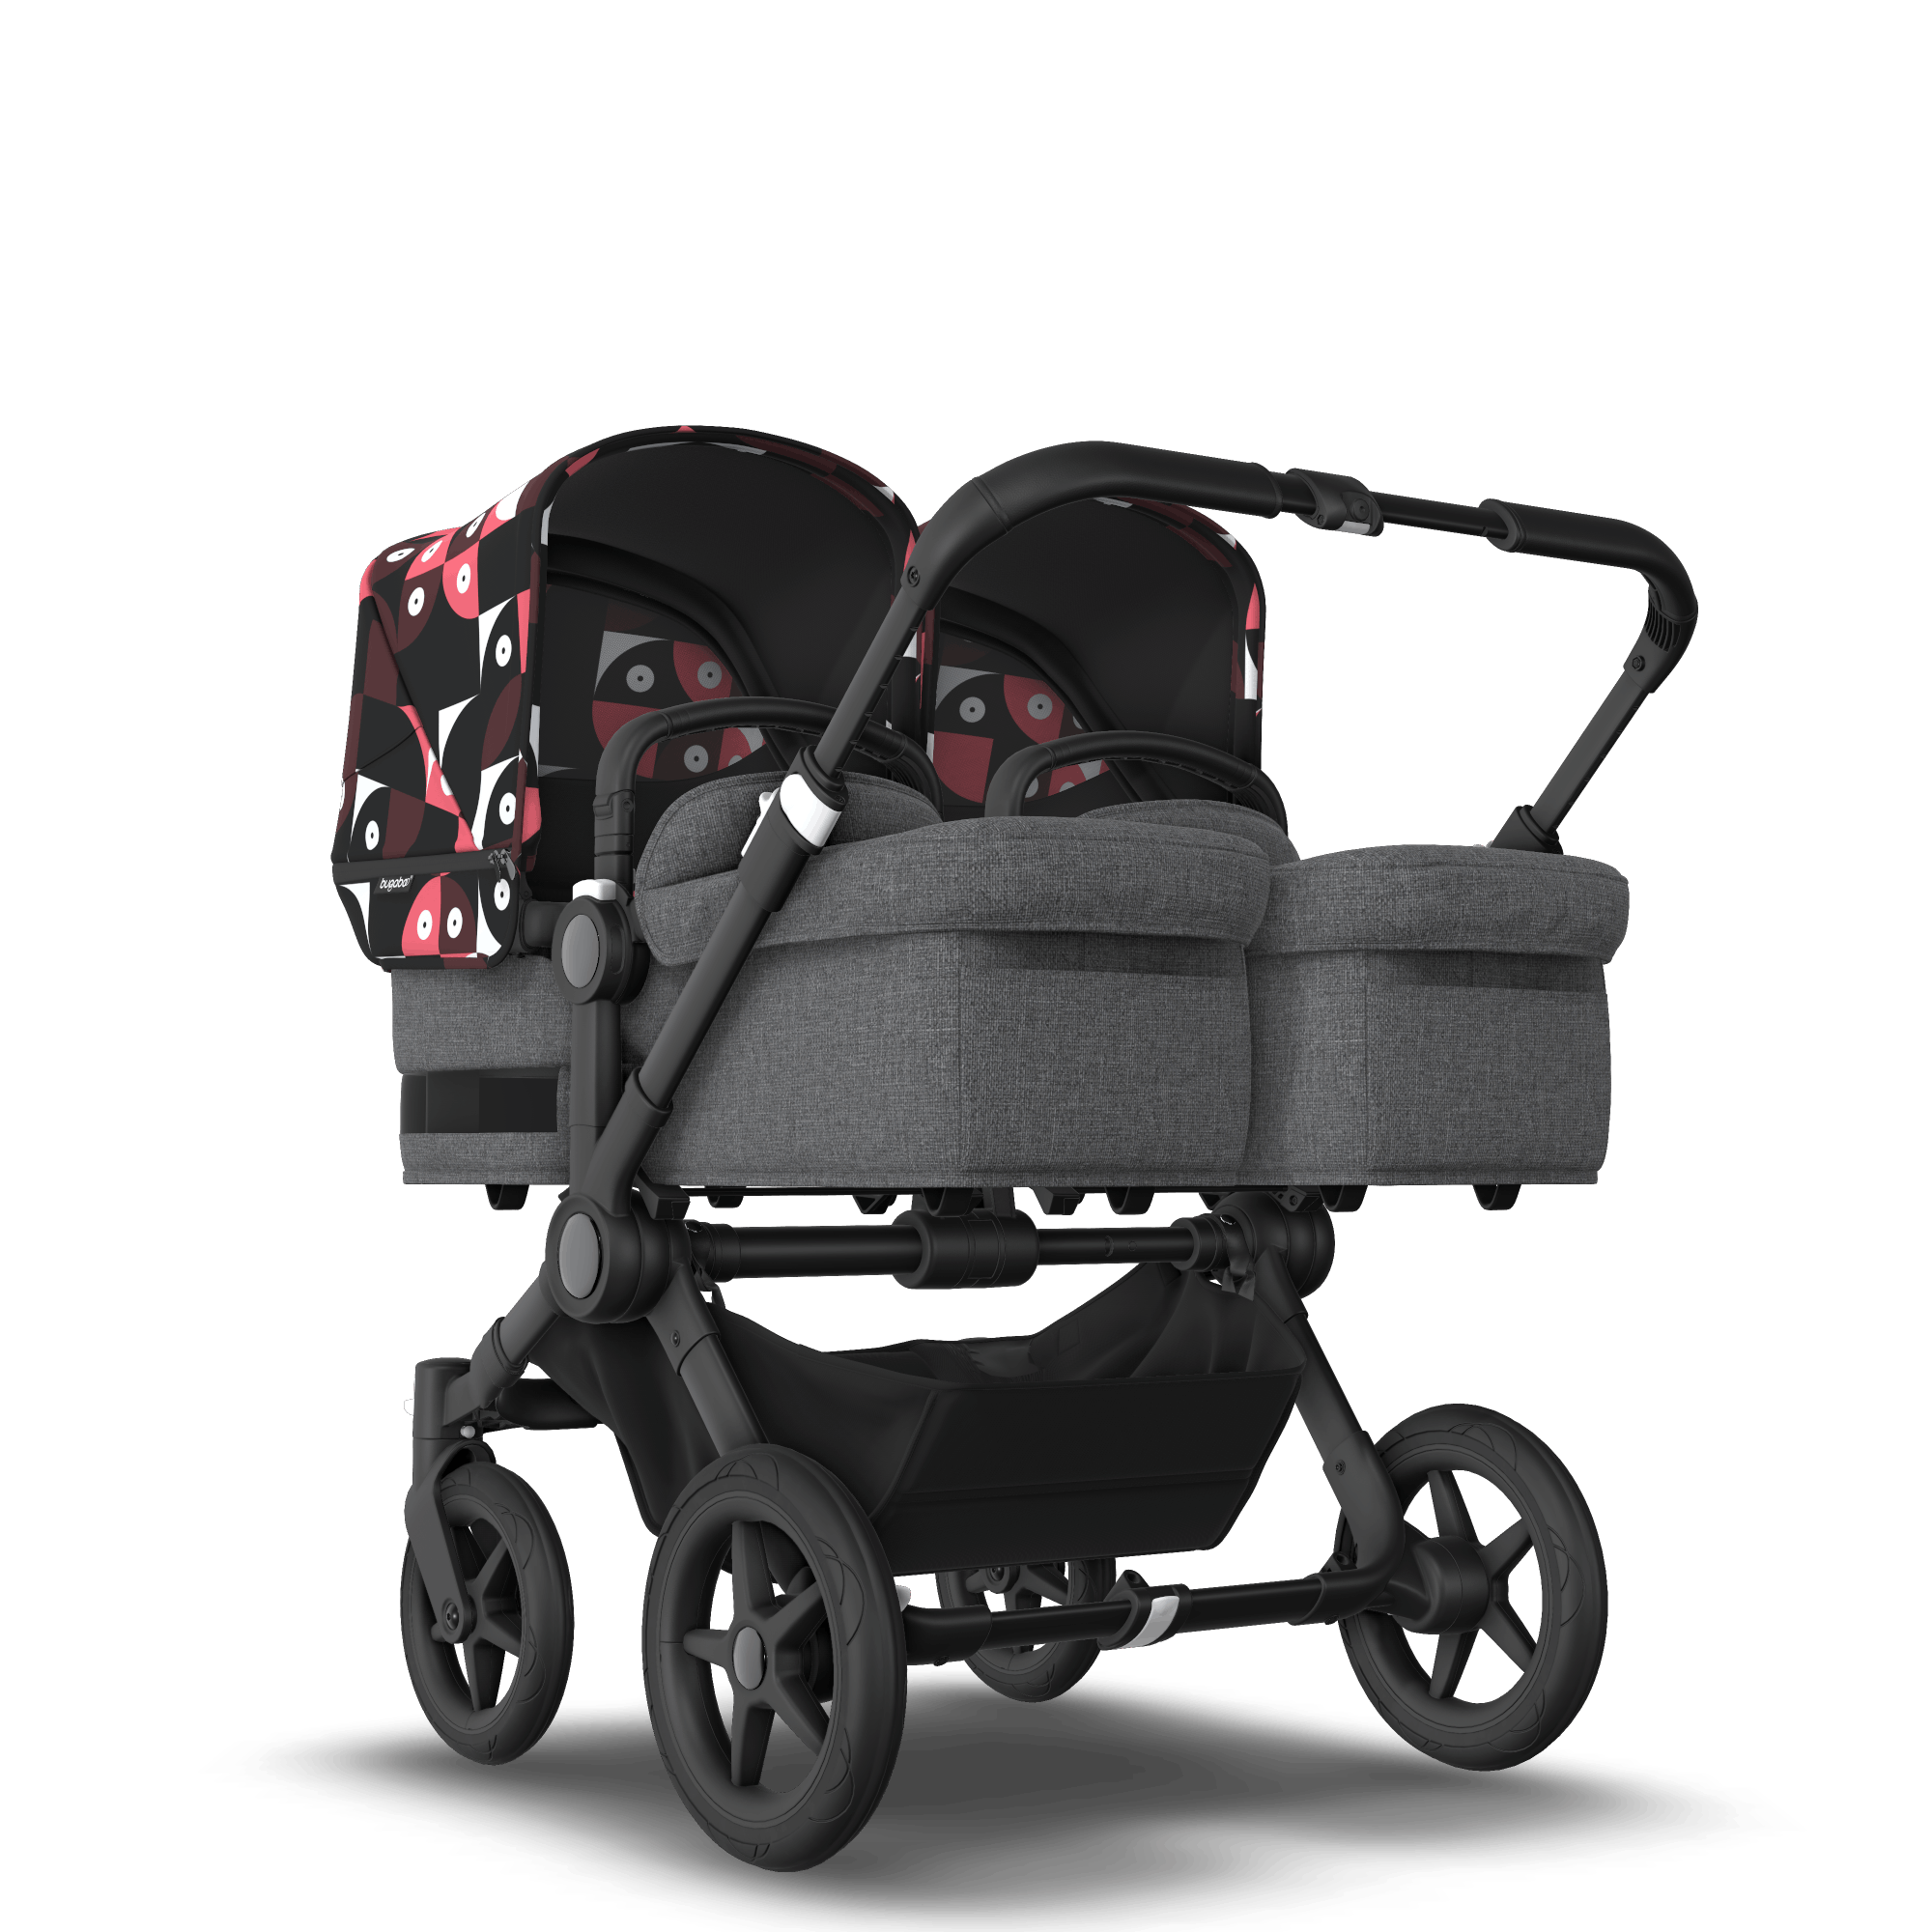 Bugaboo  Bugaboo Donkey 5 Twin bassinet and seat stroller black base grey mélange fabrics animal explorer pink/red sun canopy